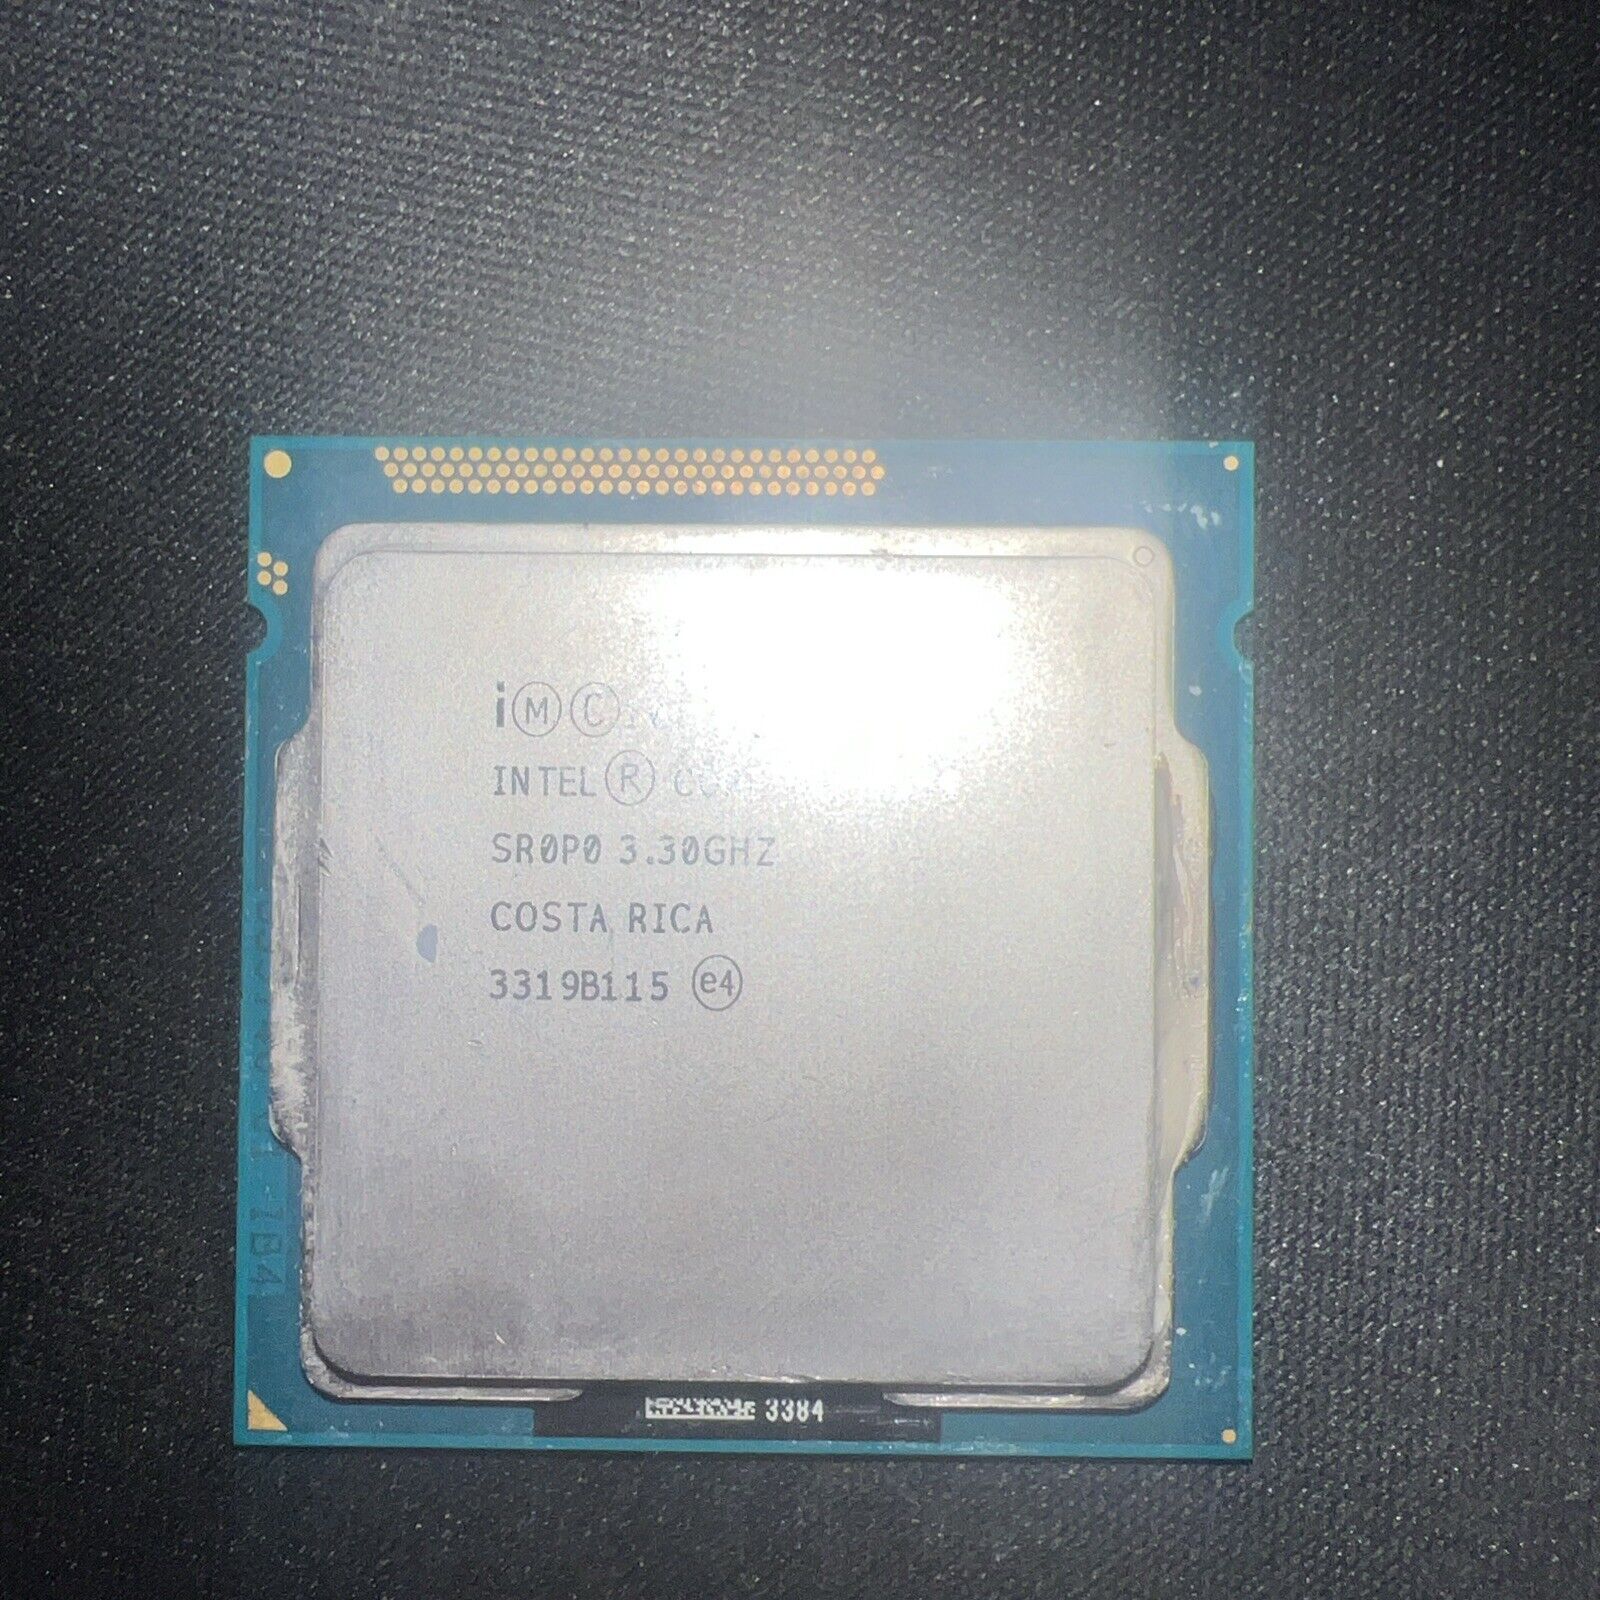 Intel Core i5-3550 - 3.3 GHz Quad-Core (SR0P0) Processor